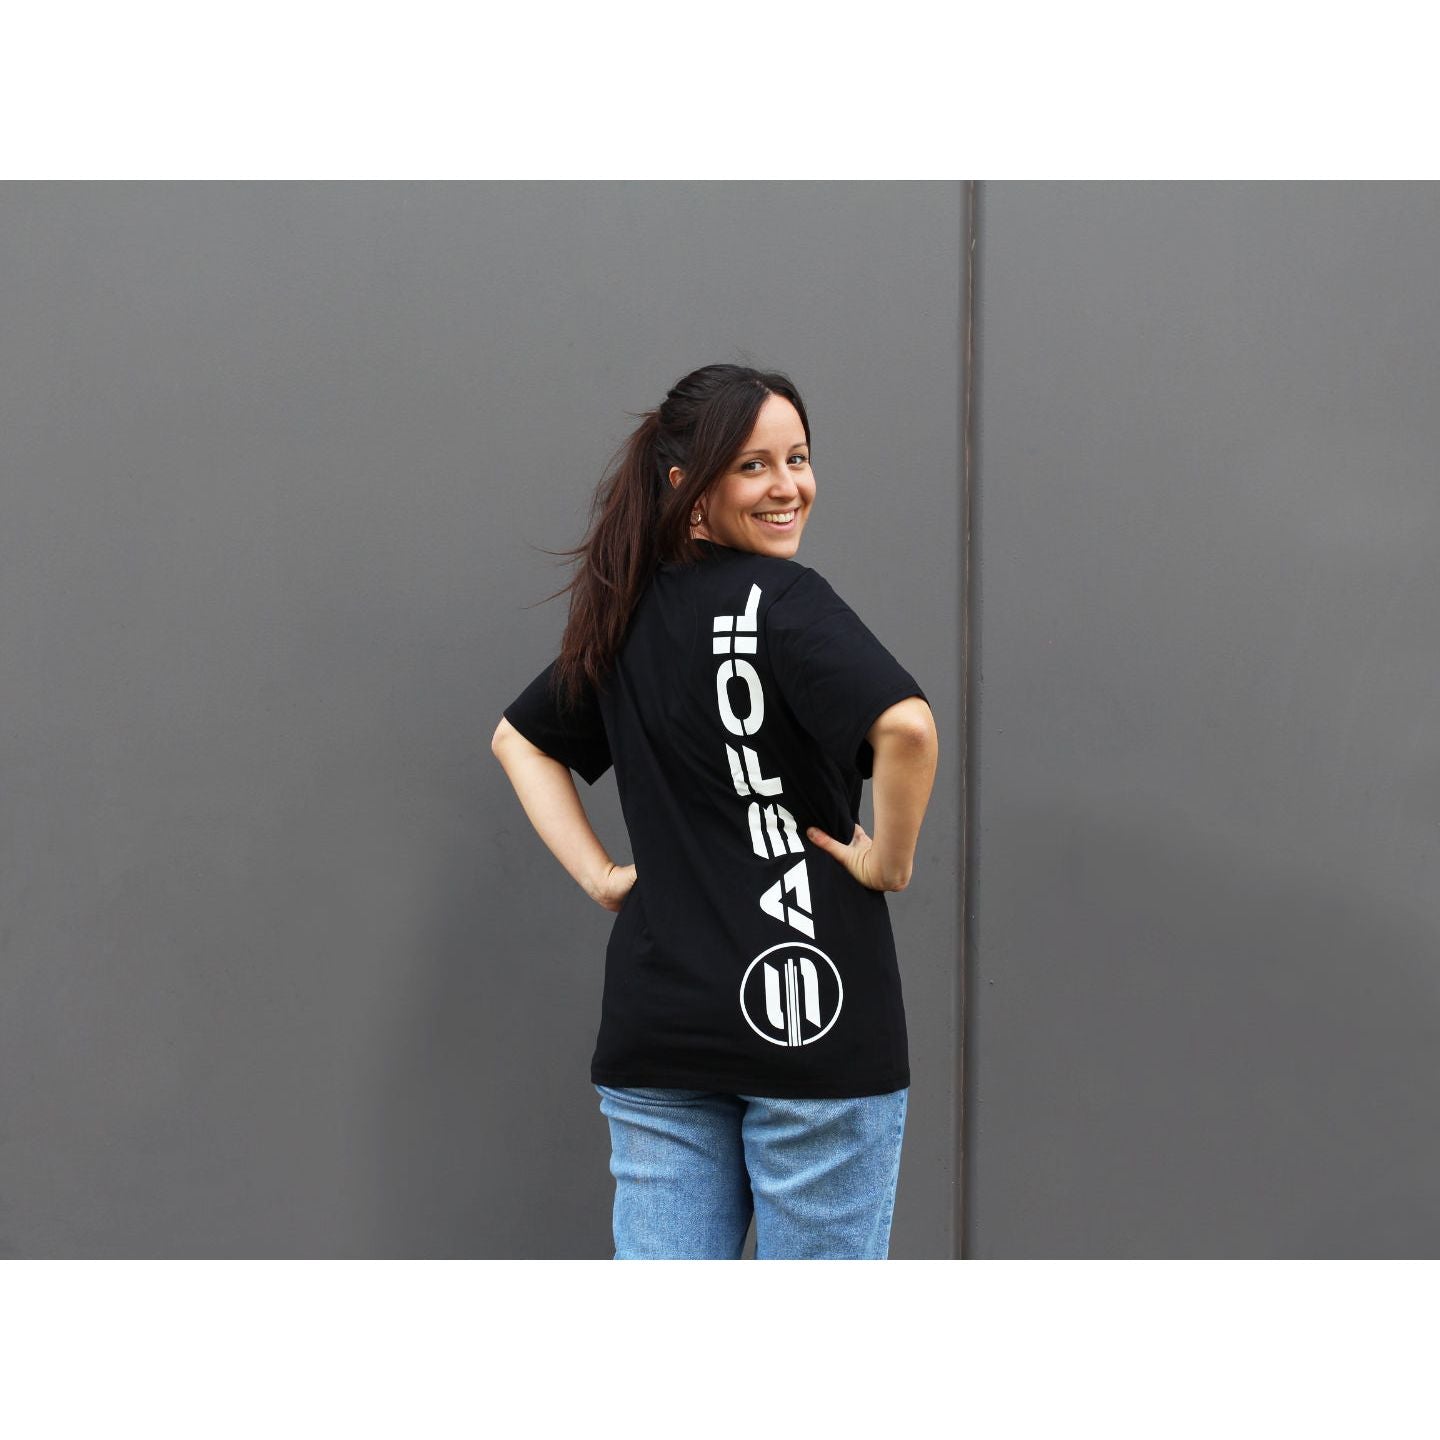 Black Sabfoil T-shirt - size L